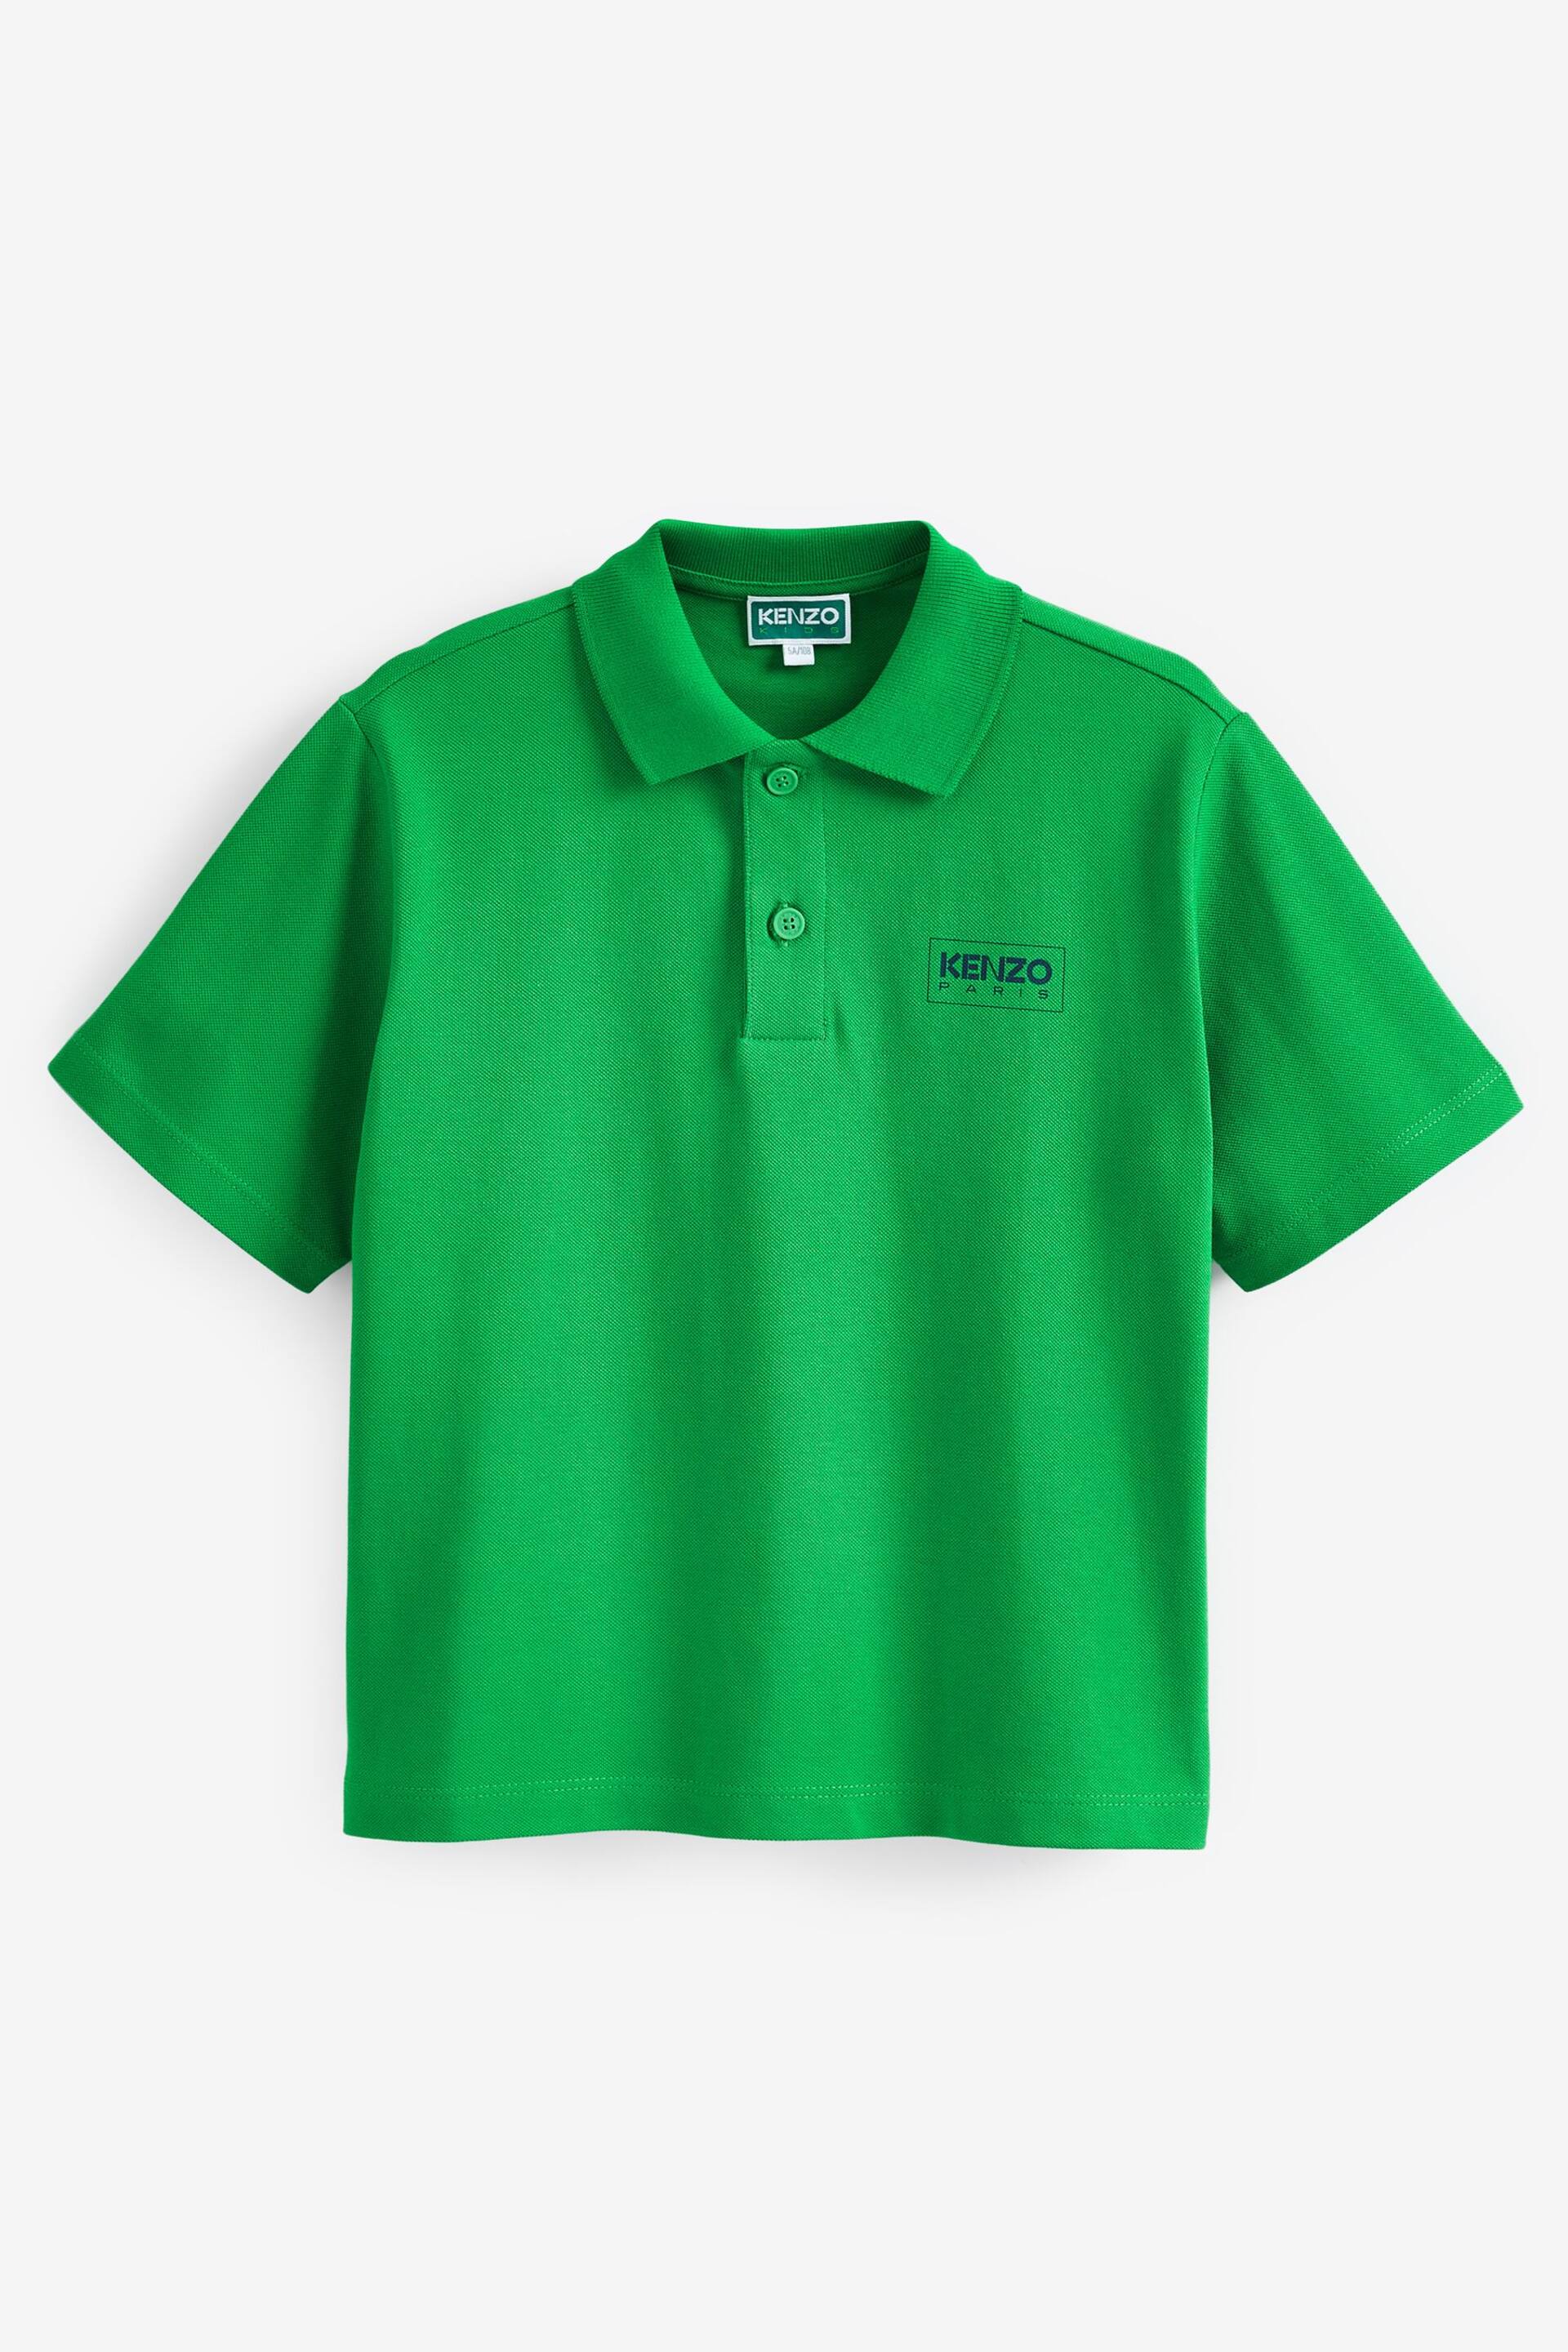 KENZO KIDS Green Logo Poloshirt - Image 3 of 5